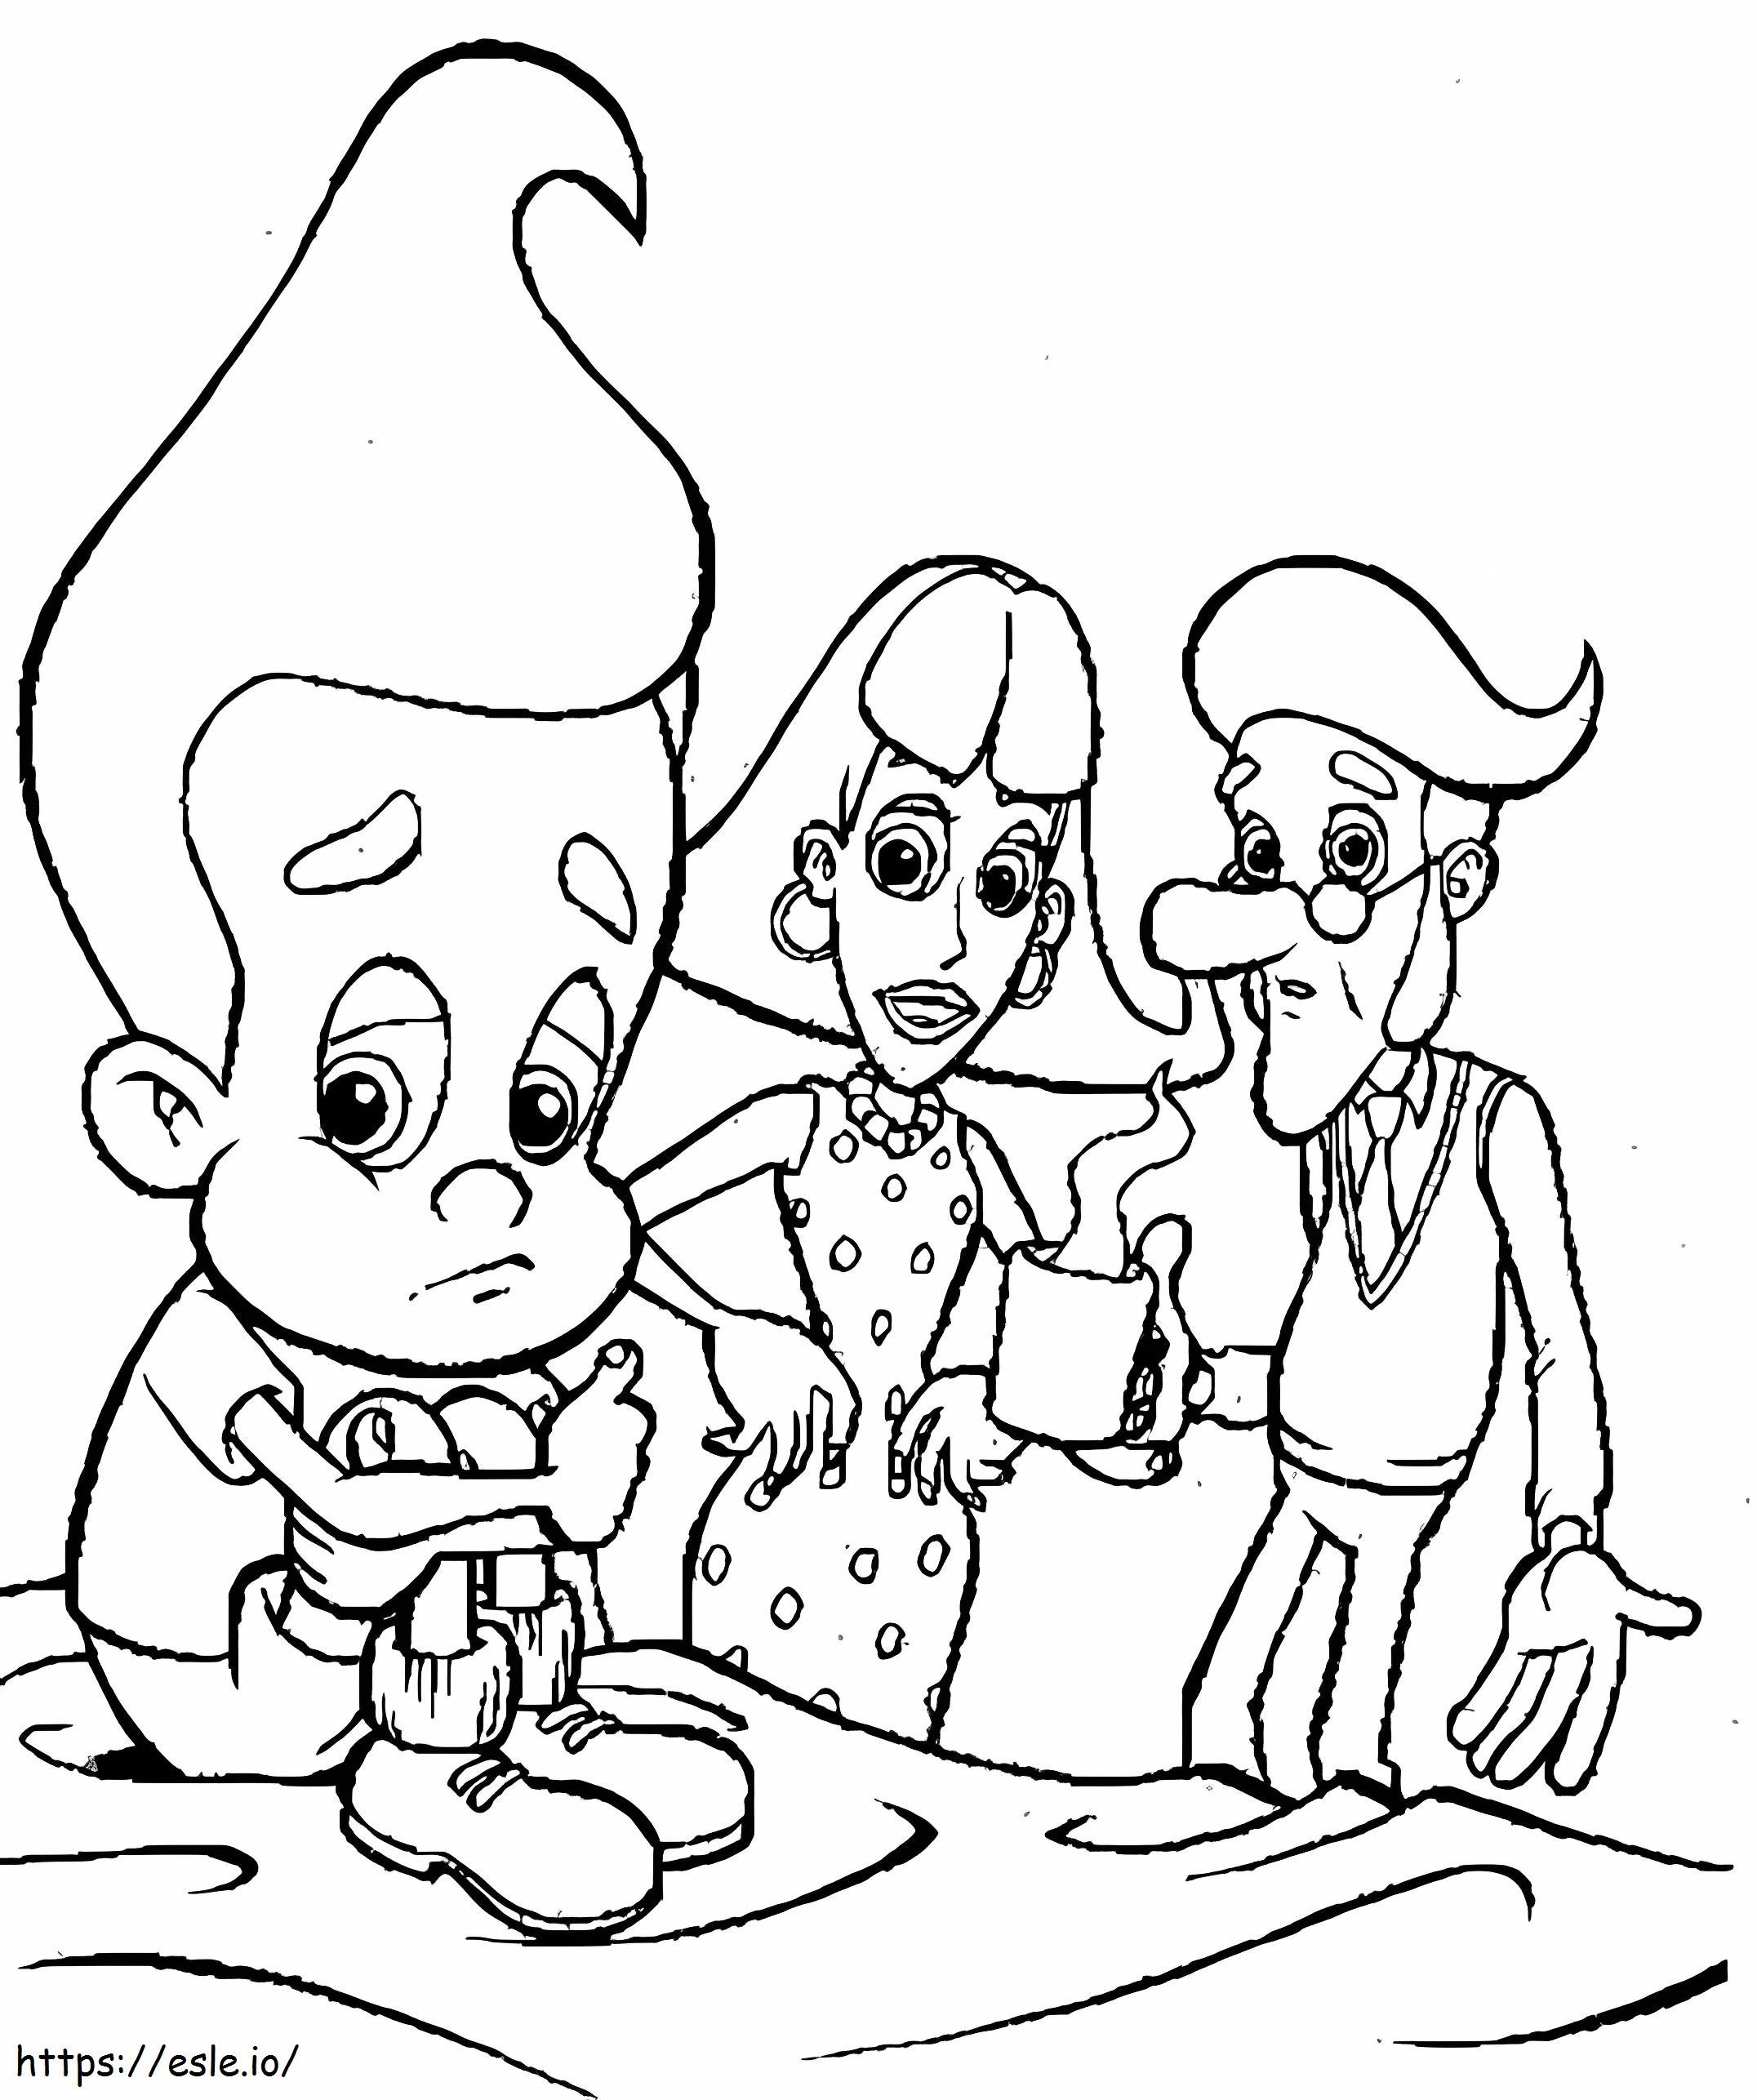 Sad Jimmy Neutron coloring page